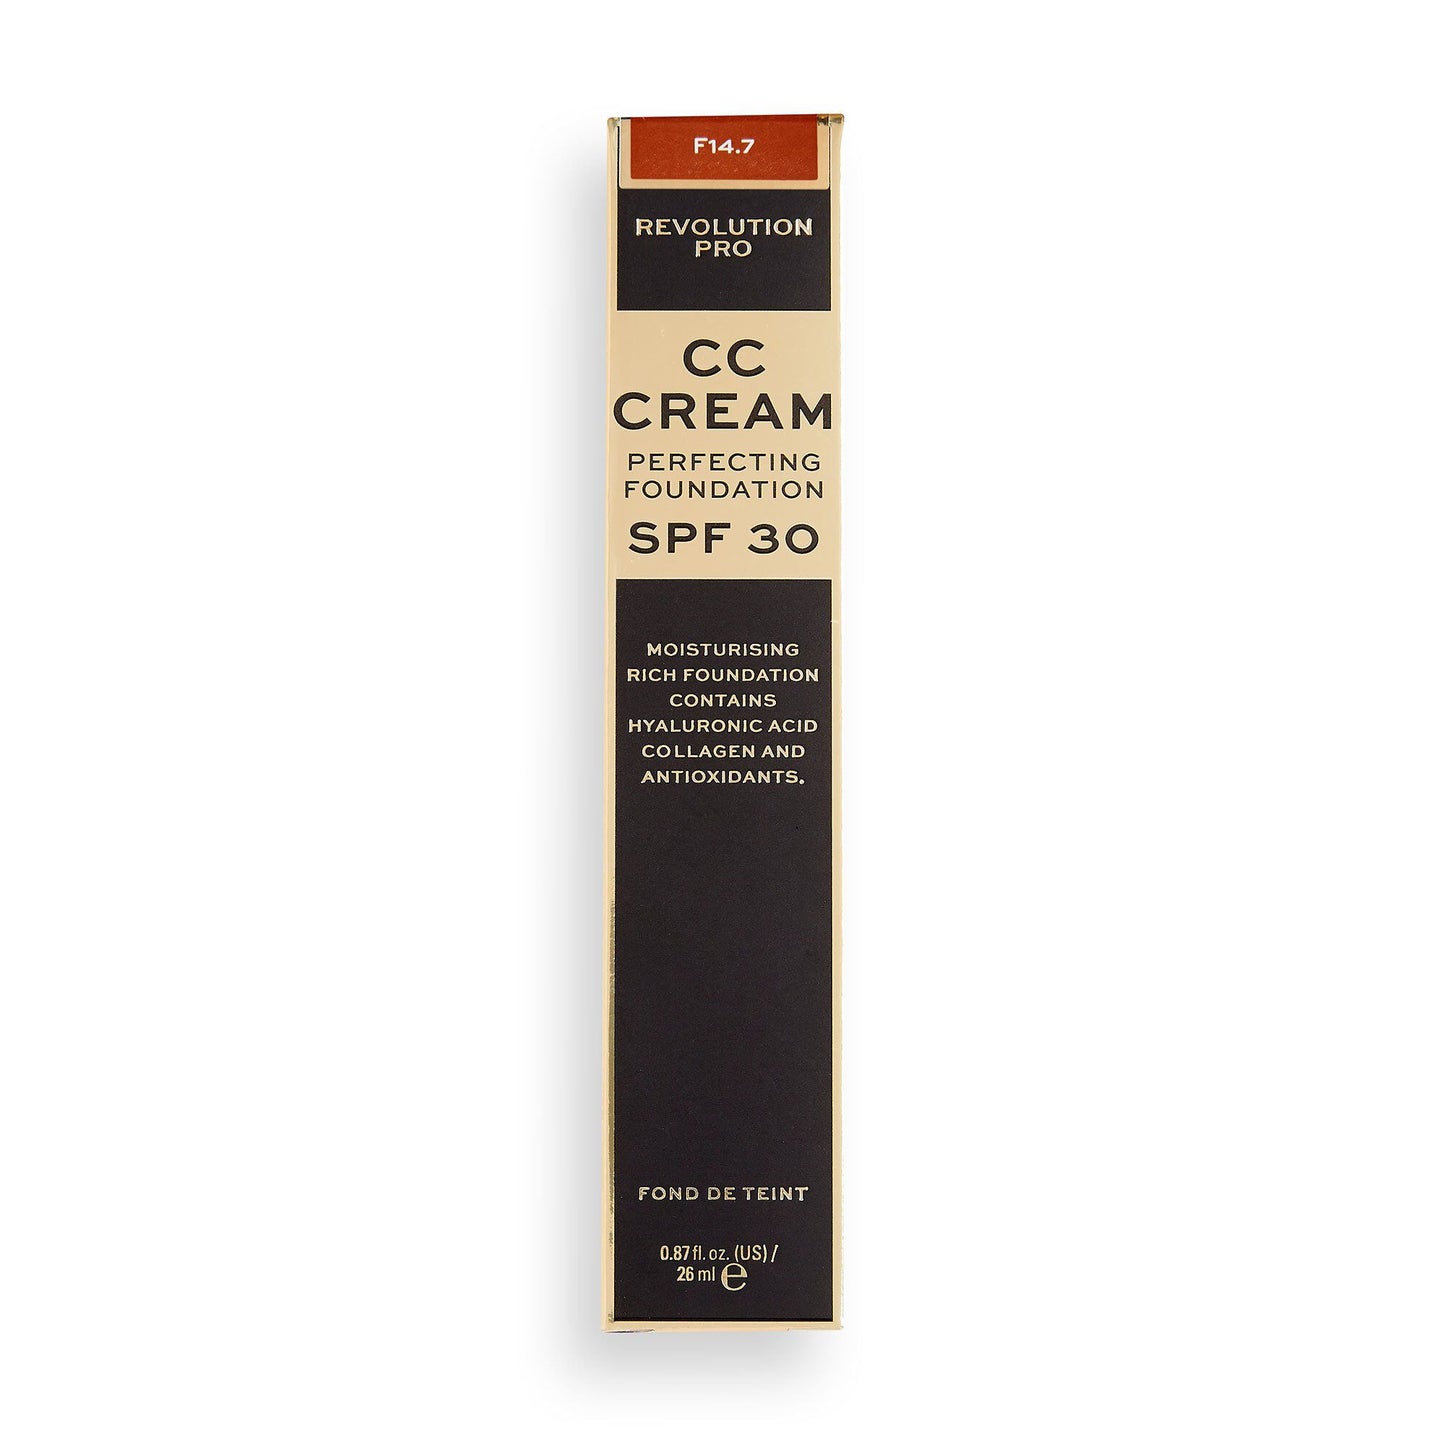 Revolution Pro CC Cream Perfecting Foundation SPF30 F14.7